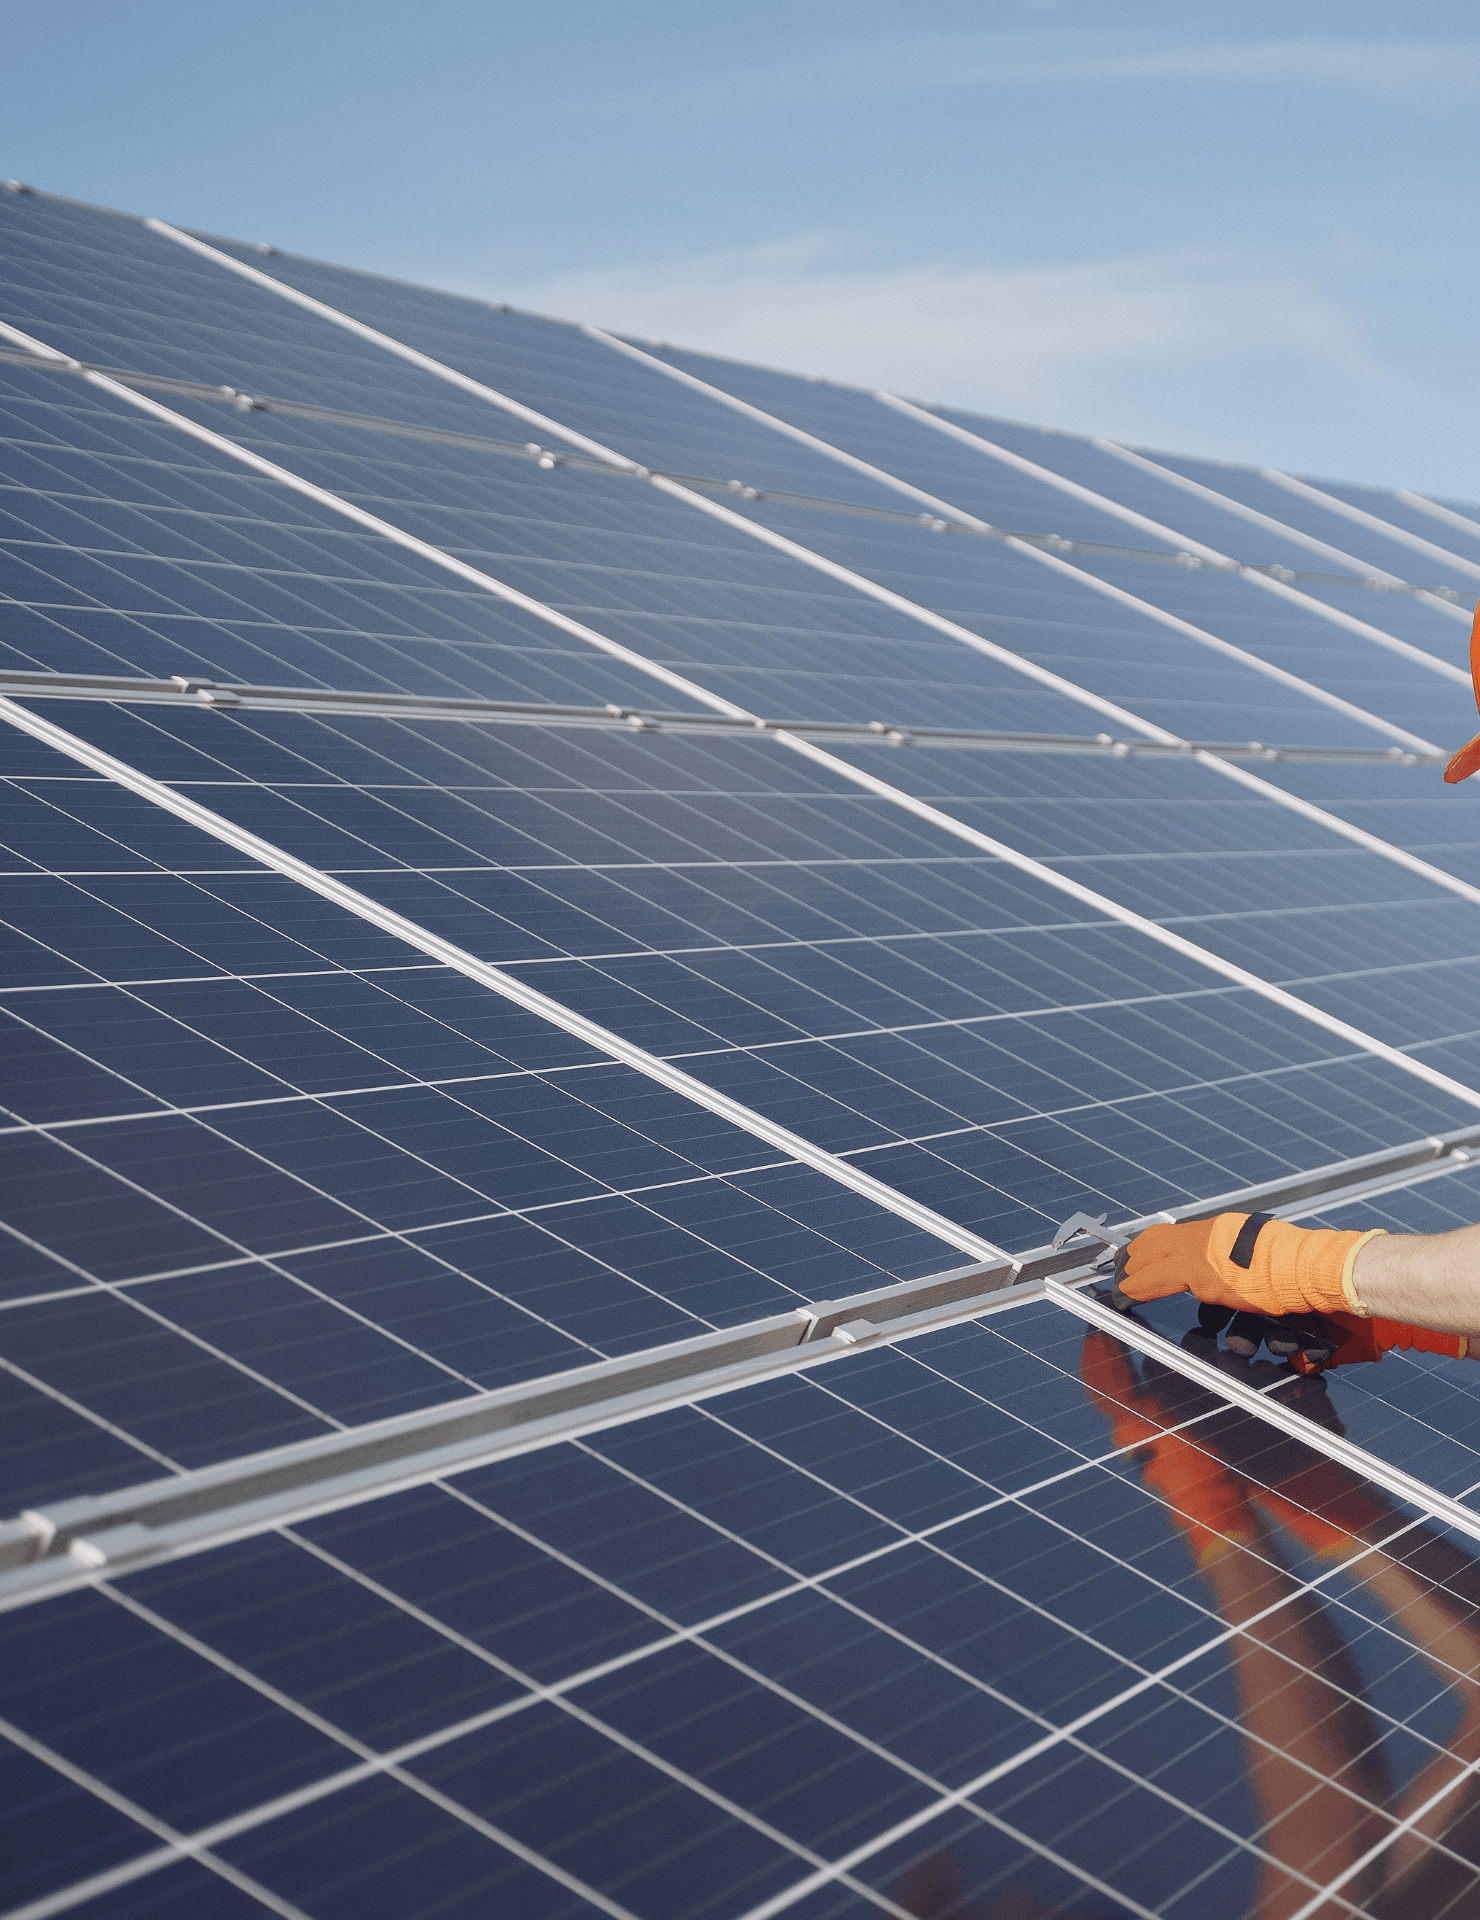 st. louis solar installation, missouri solar incentives, solar energy